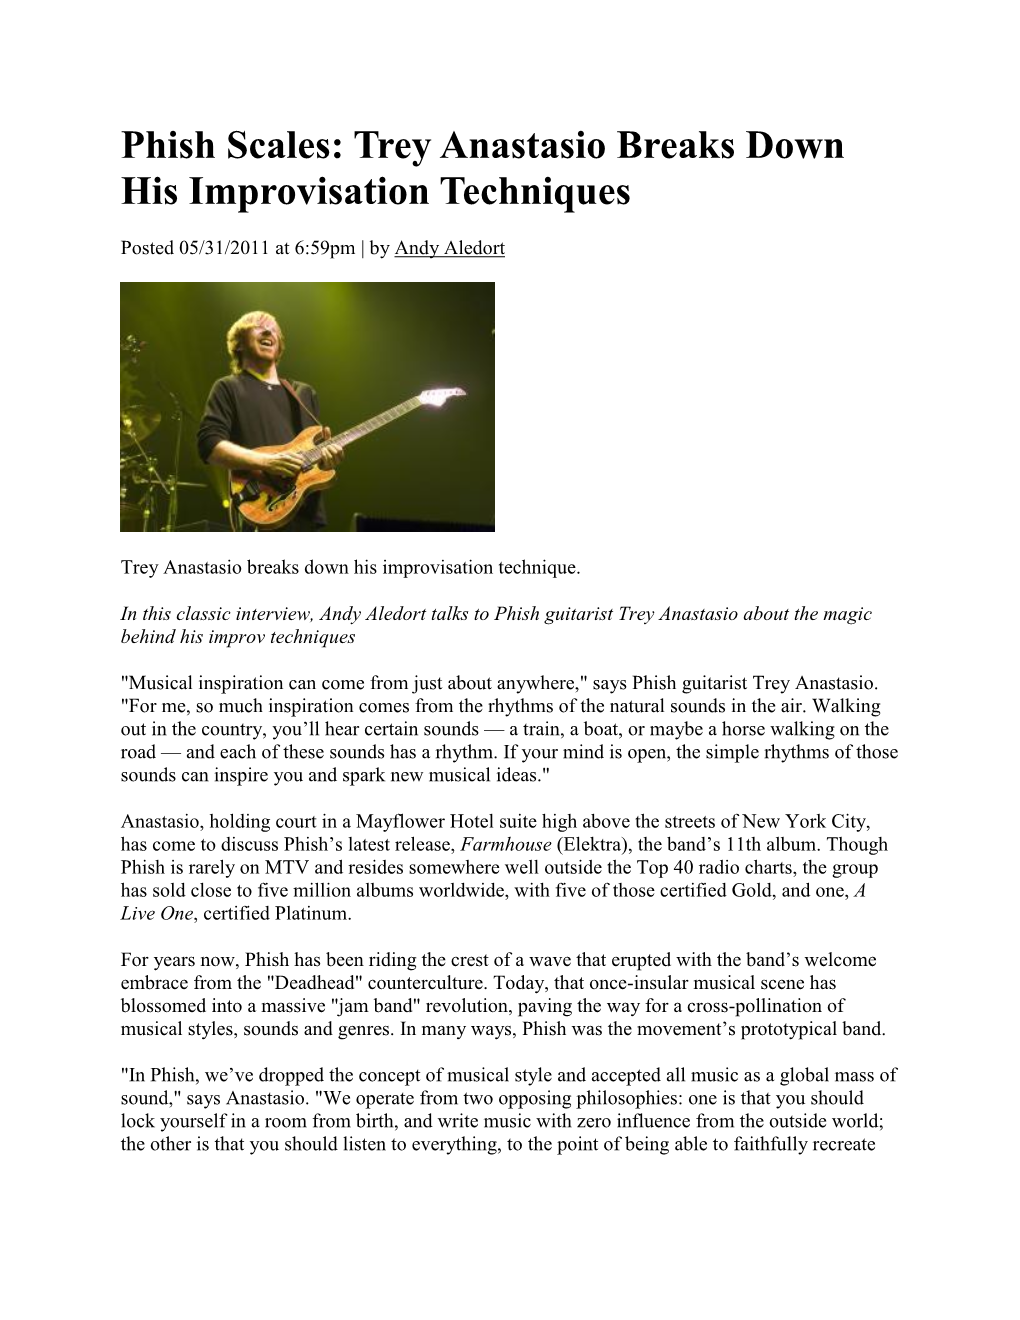 Phish Scales: Trey Anastasio Breaks Down His Improvisation Techniques